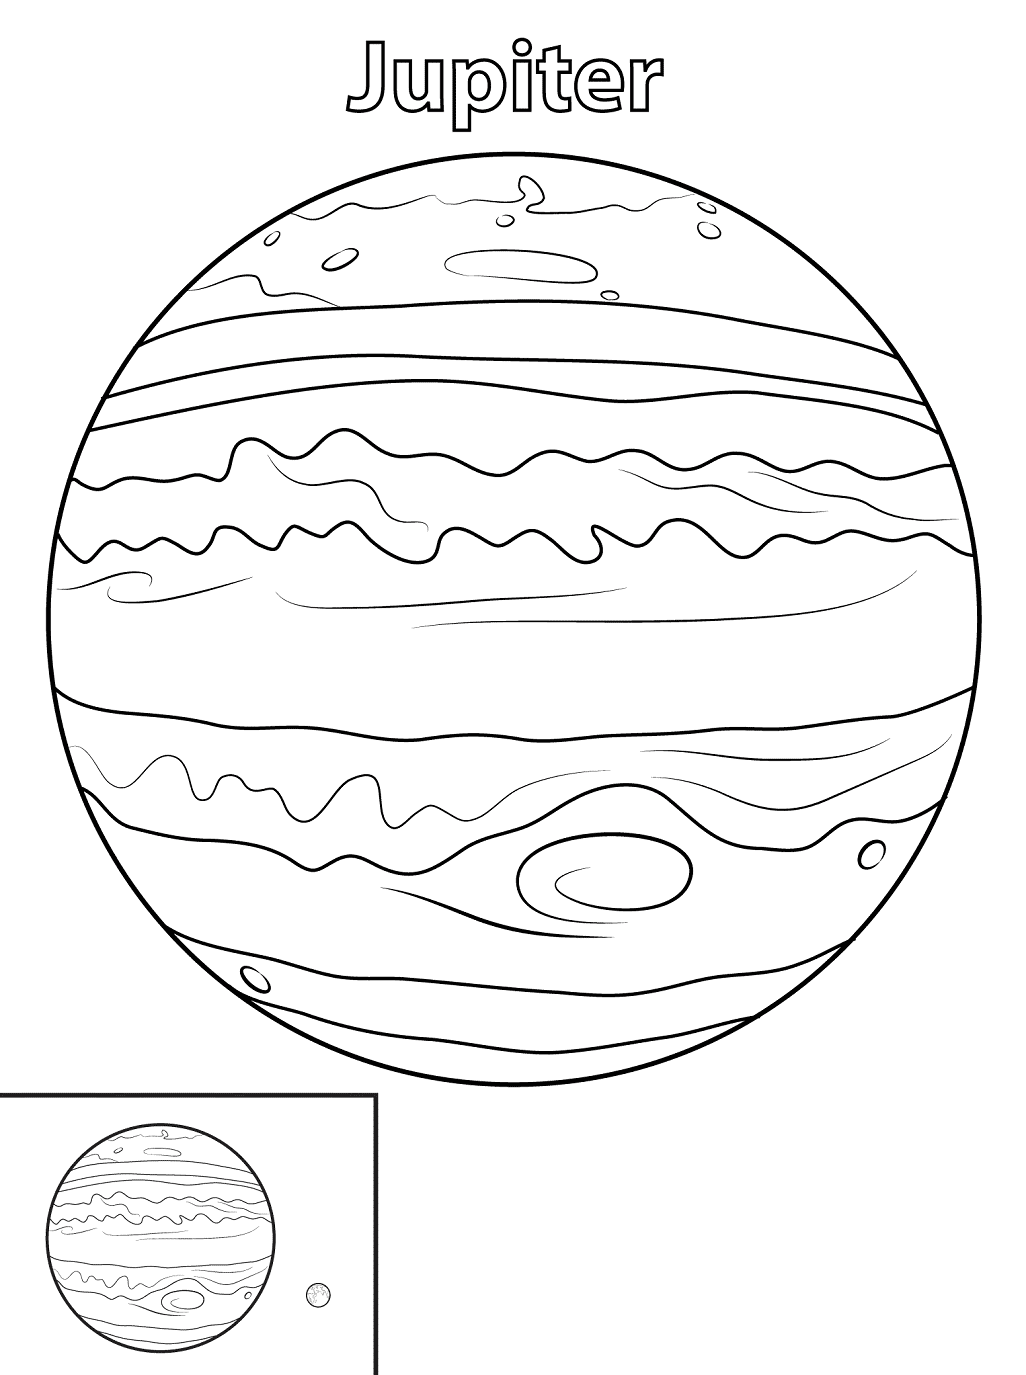 Jupiter Planet Coloring Pages